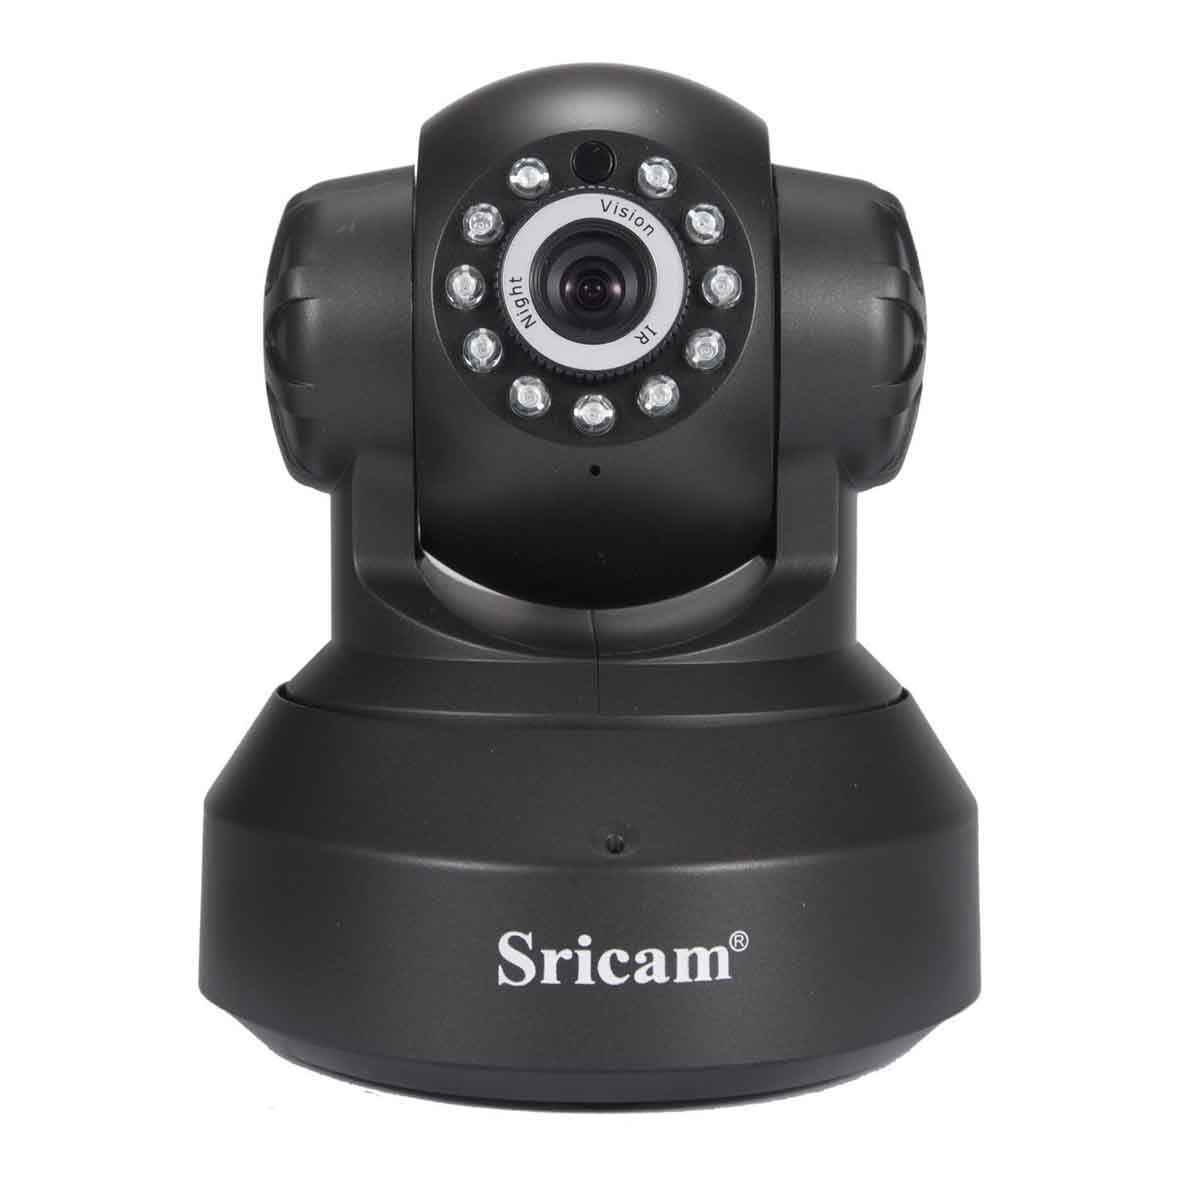 Sricam SP Series SP005 security camera